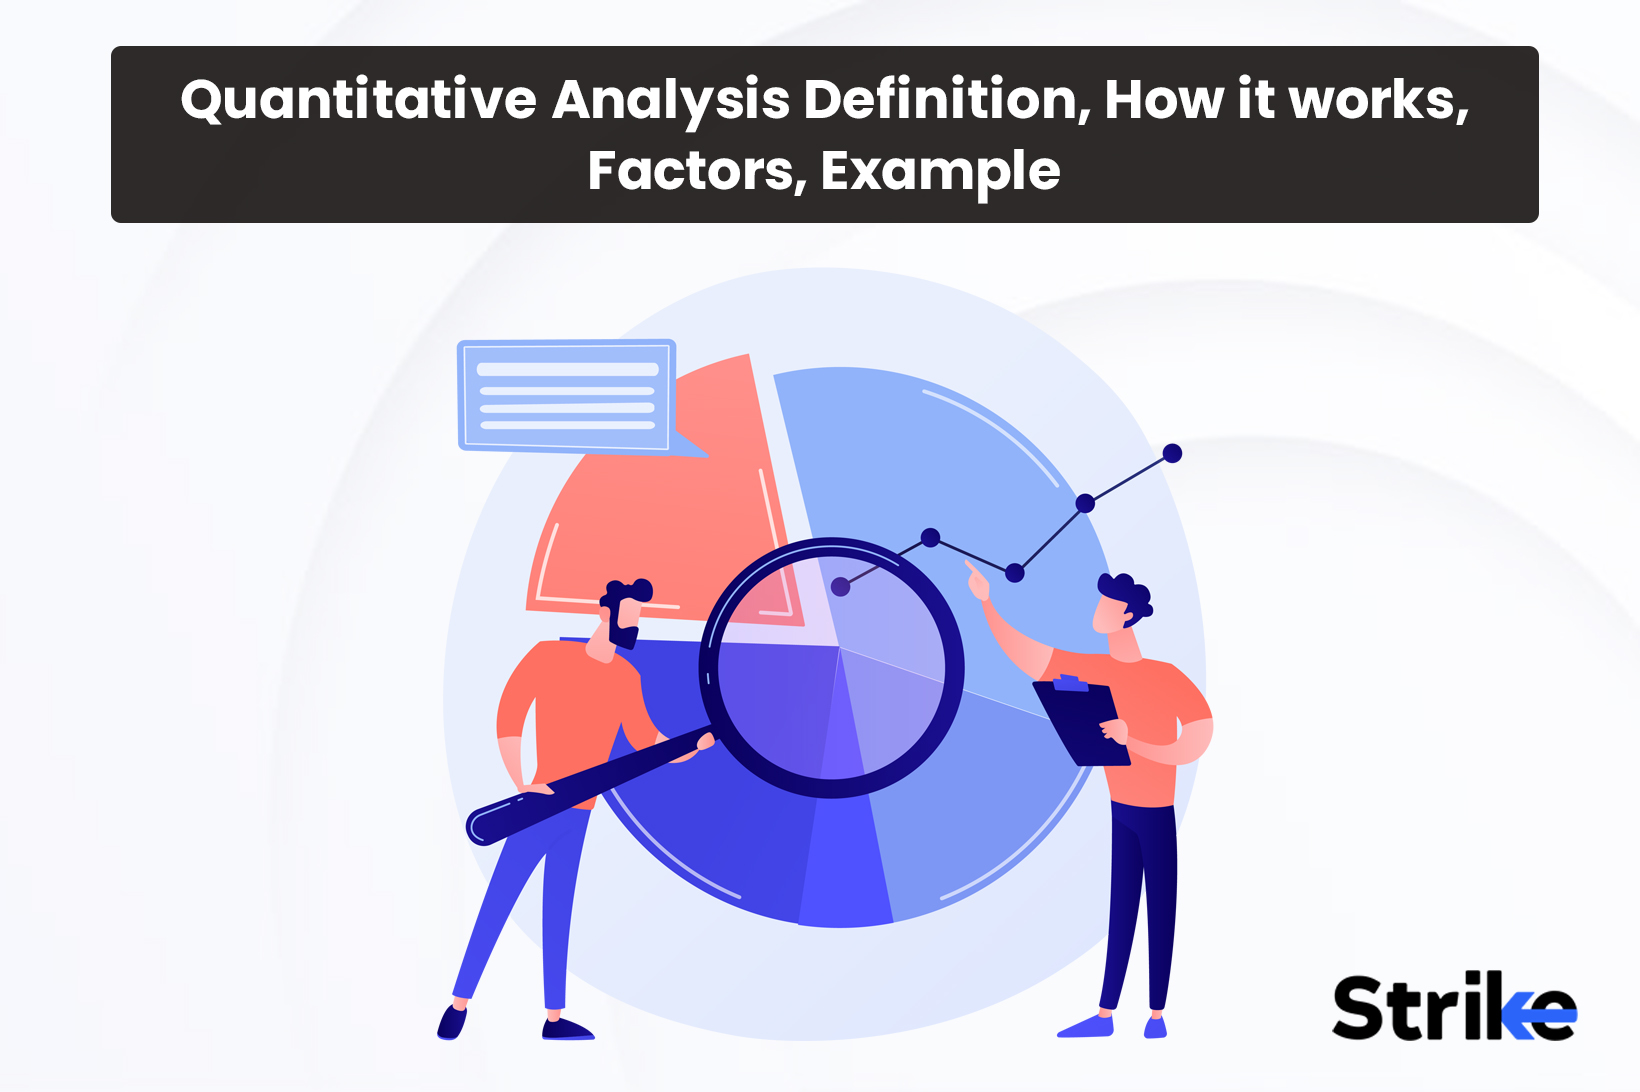 Quantitative Analysis: Definition, How it works, Factors, Example